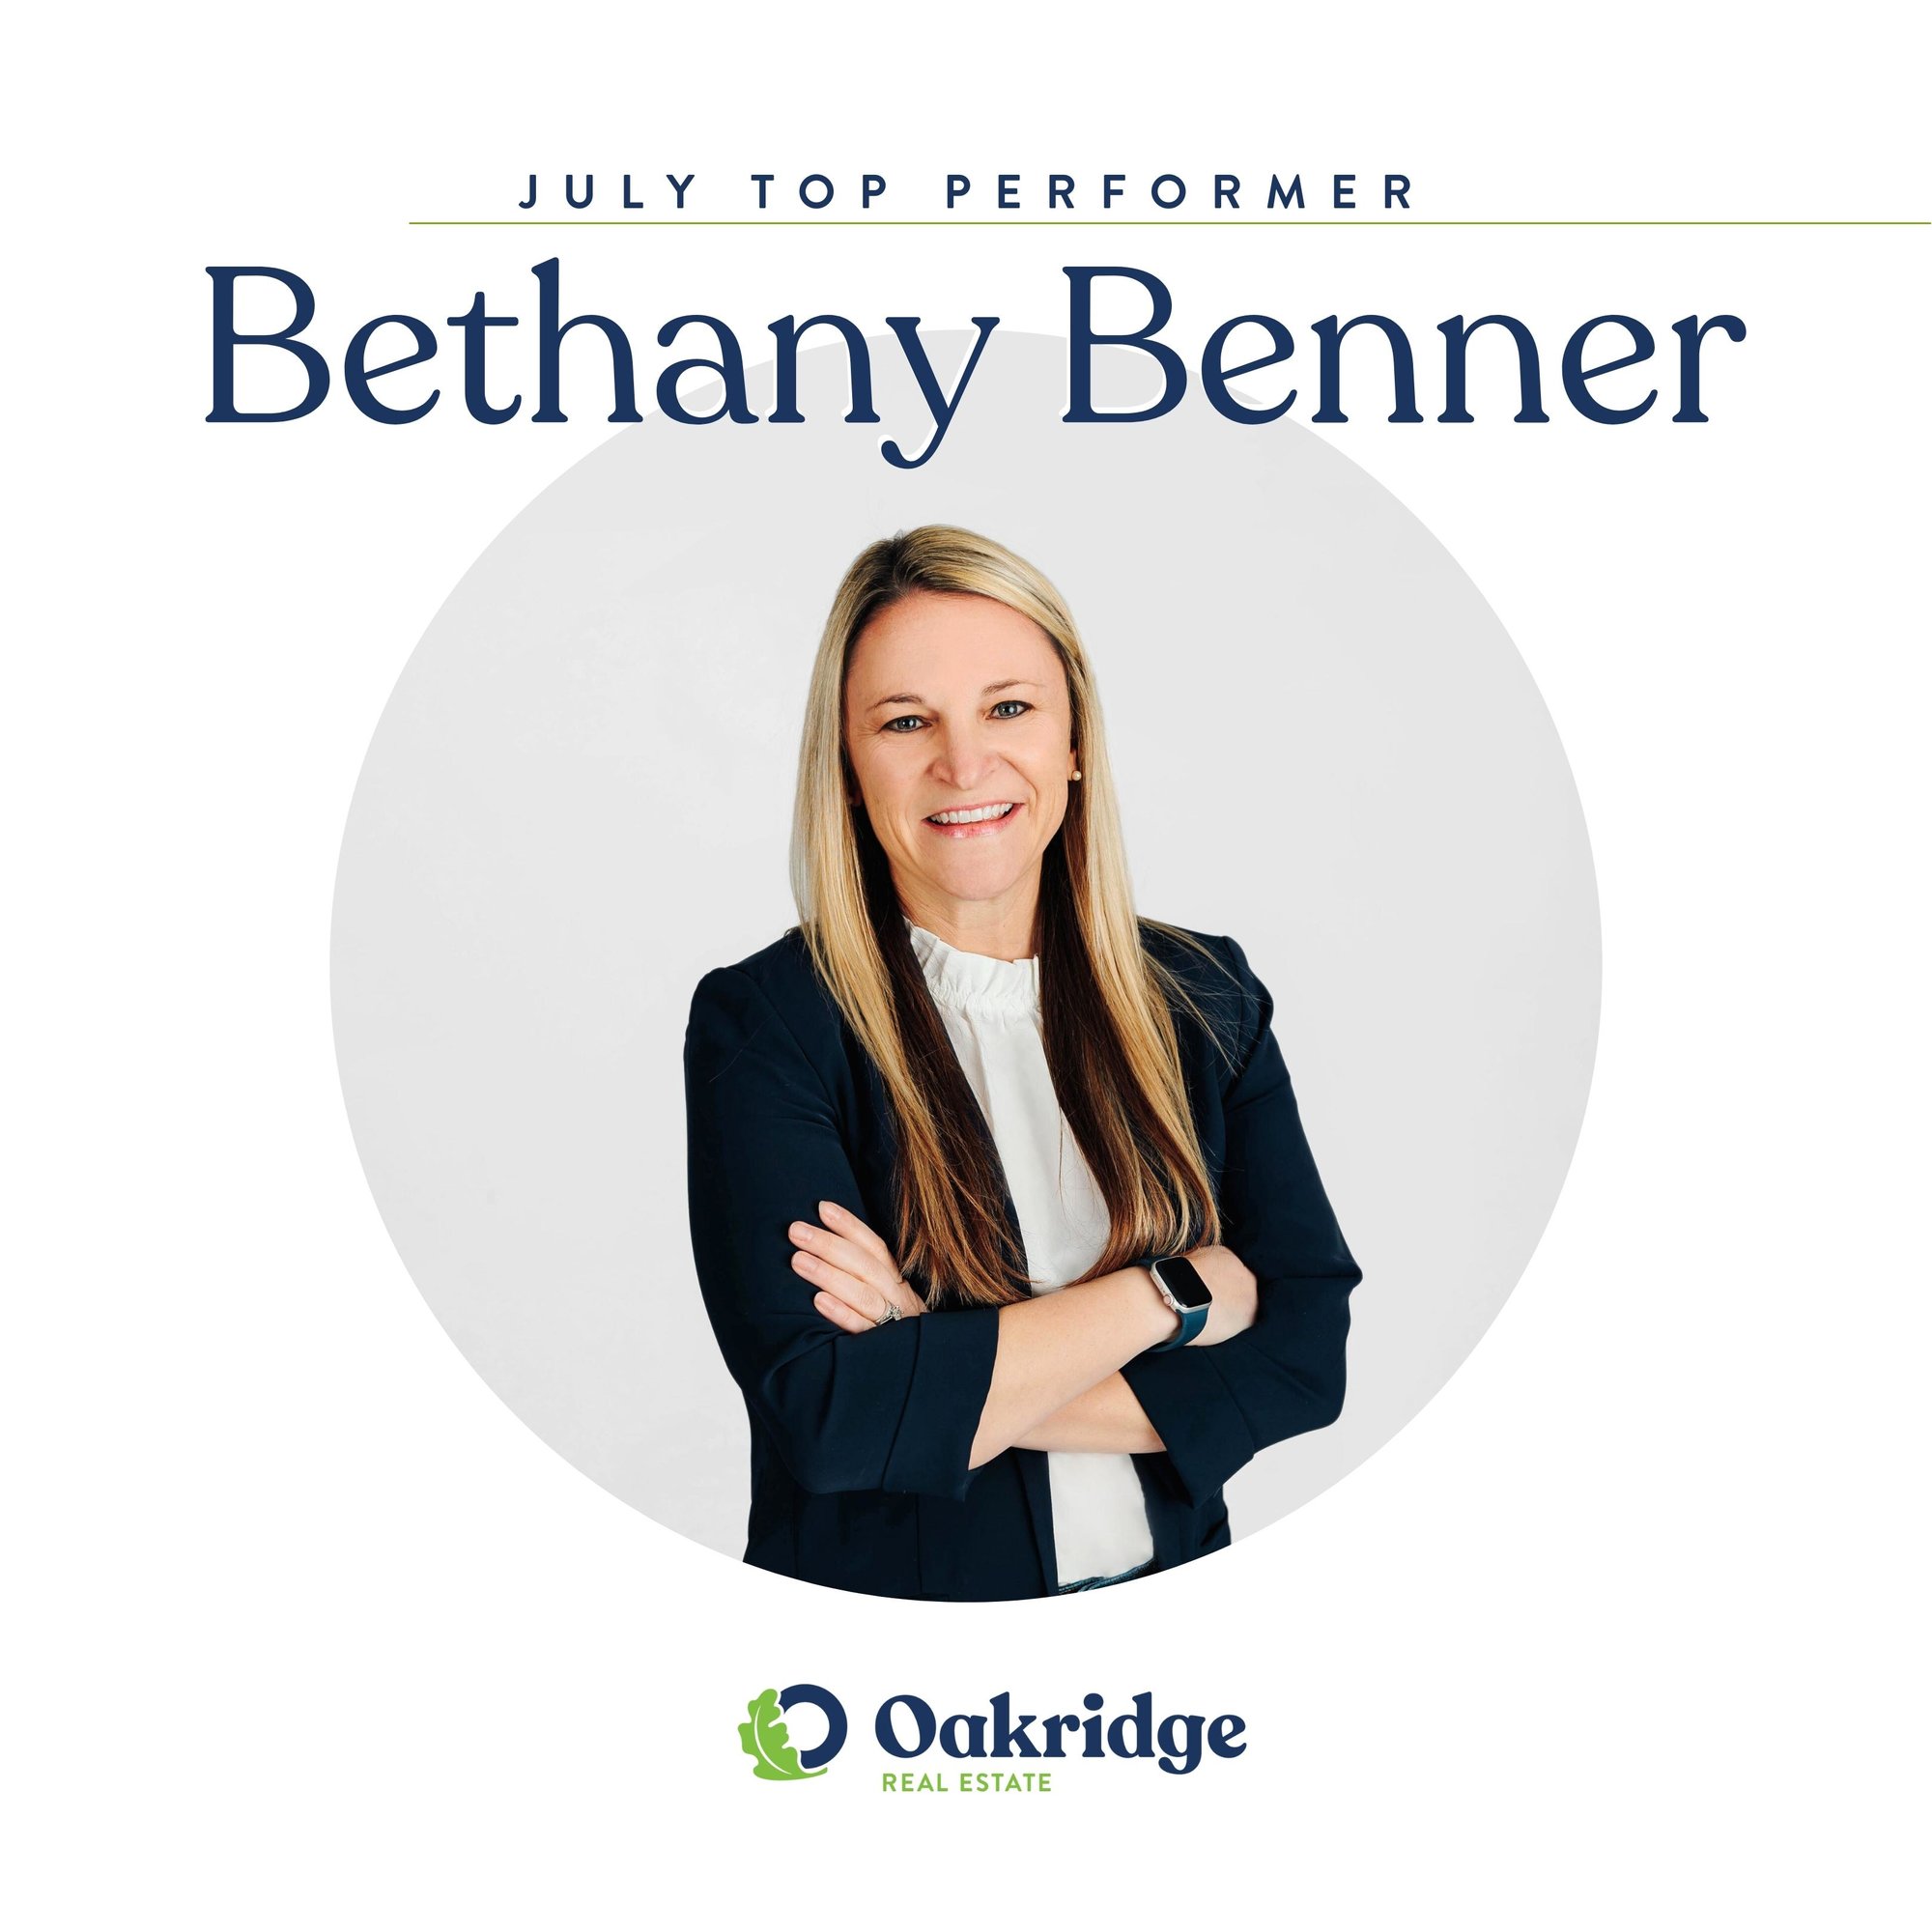 Bethany Benner July Top Performer | Oakridge Real Estate